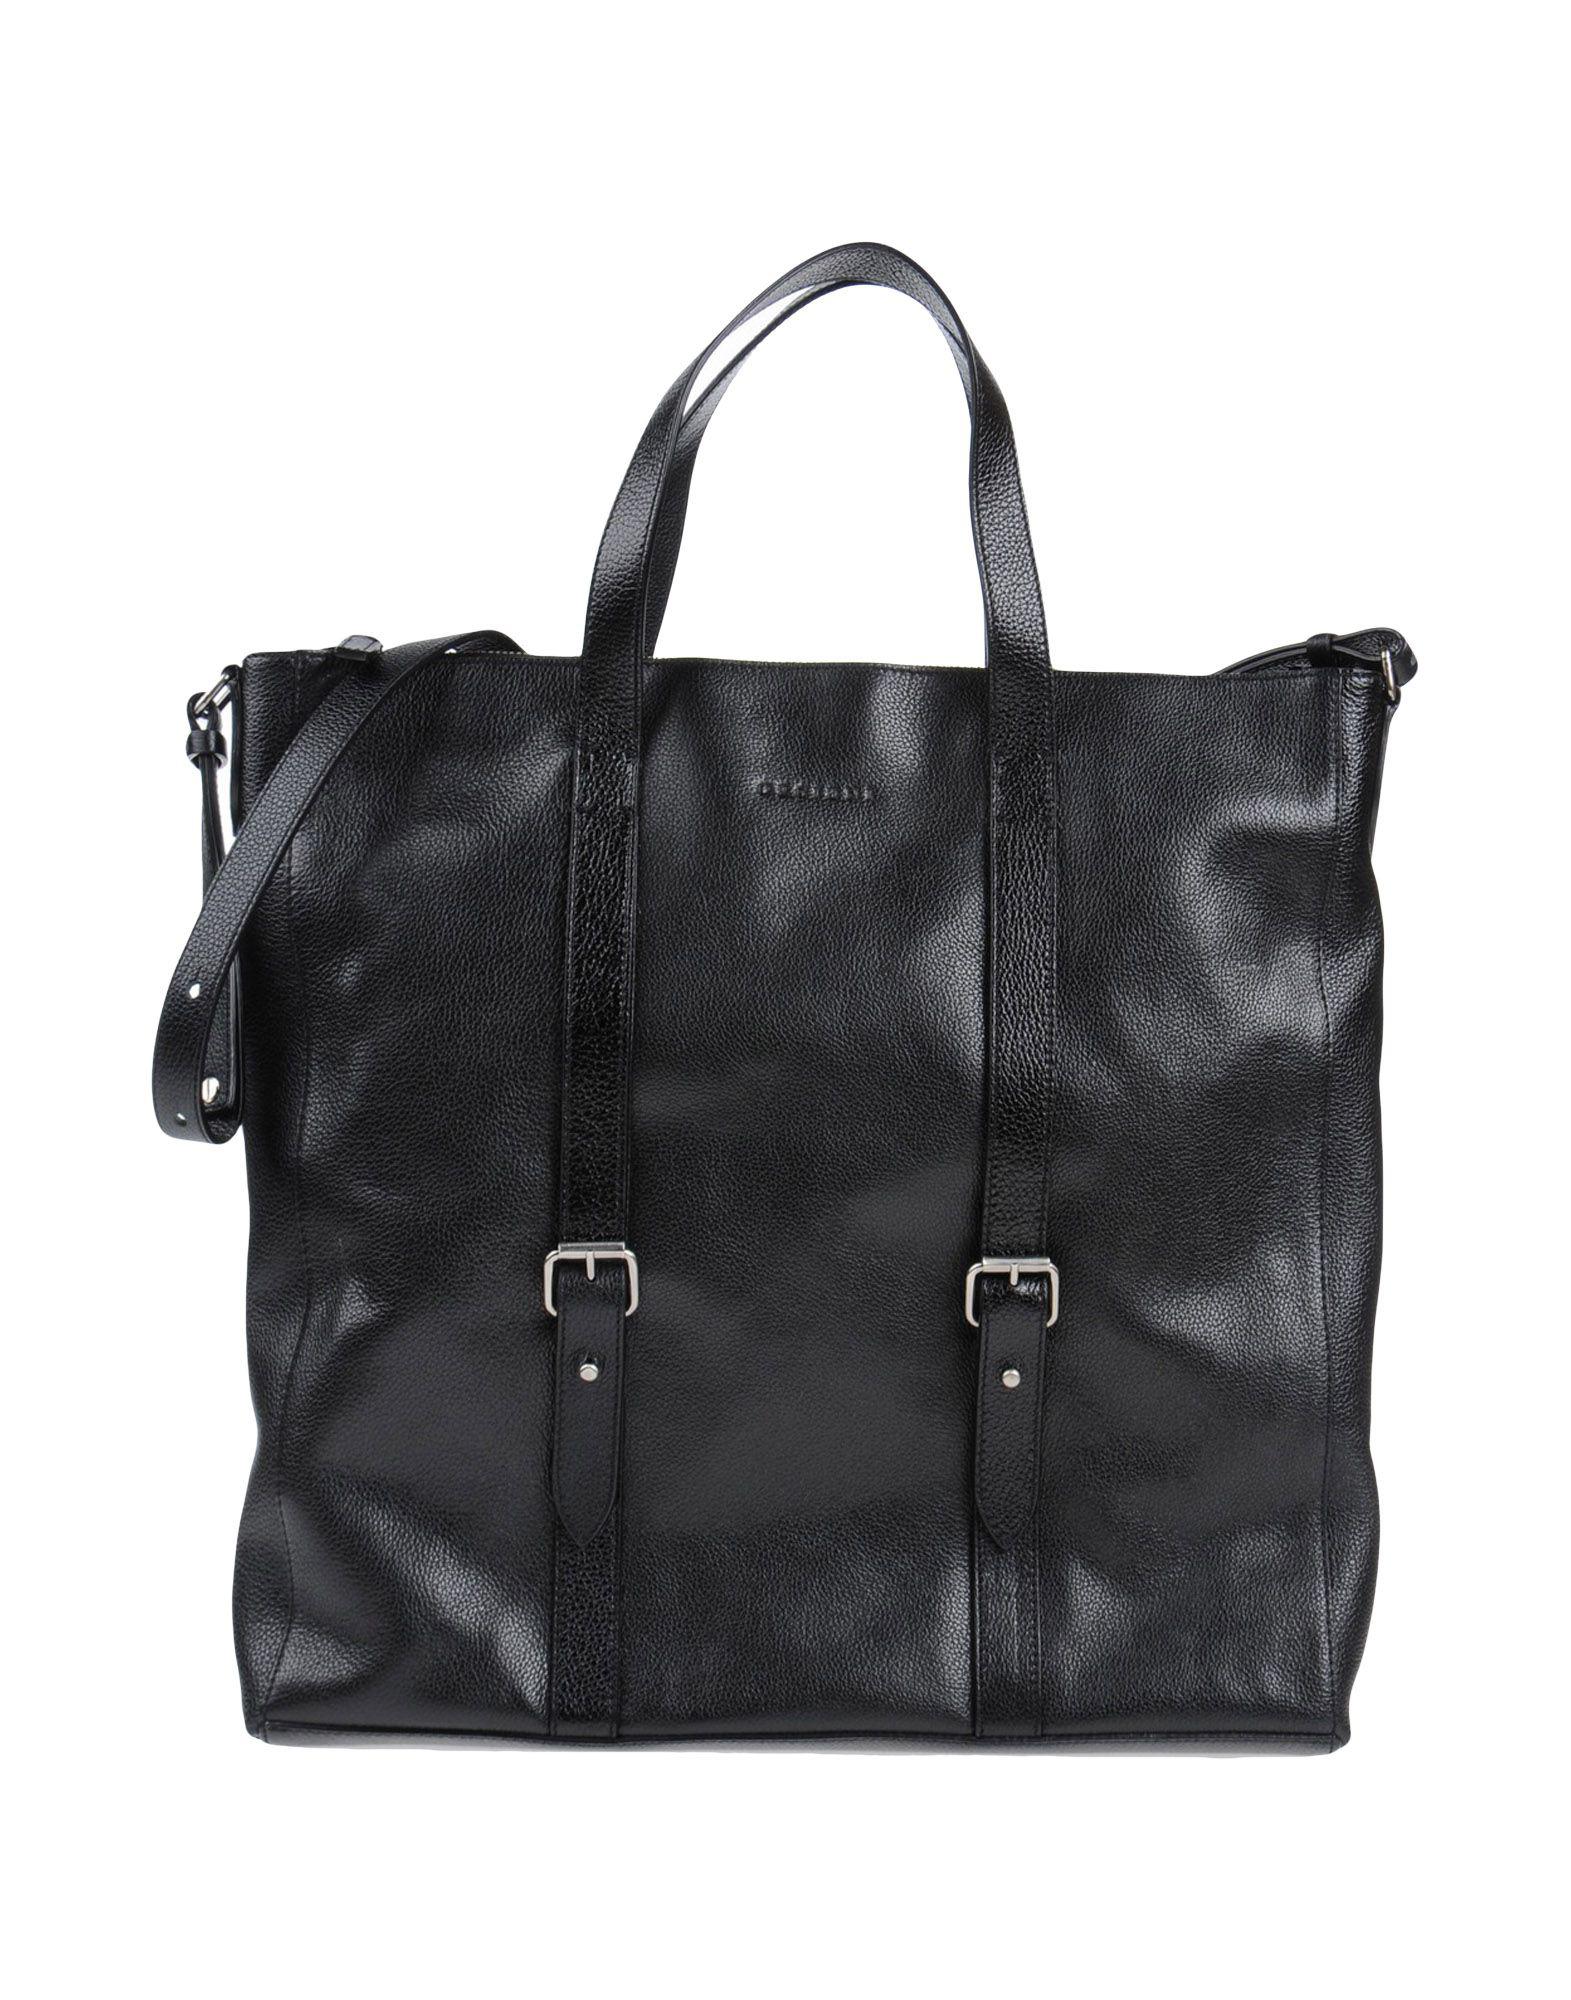 Lyst - Orciani Handbag in Black